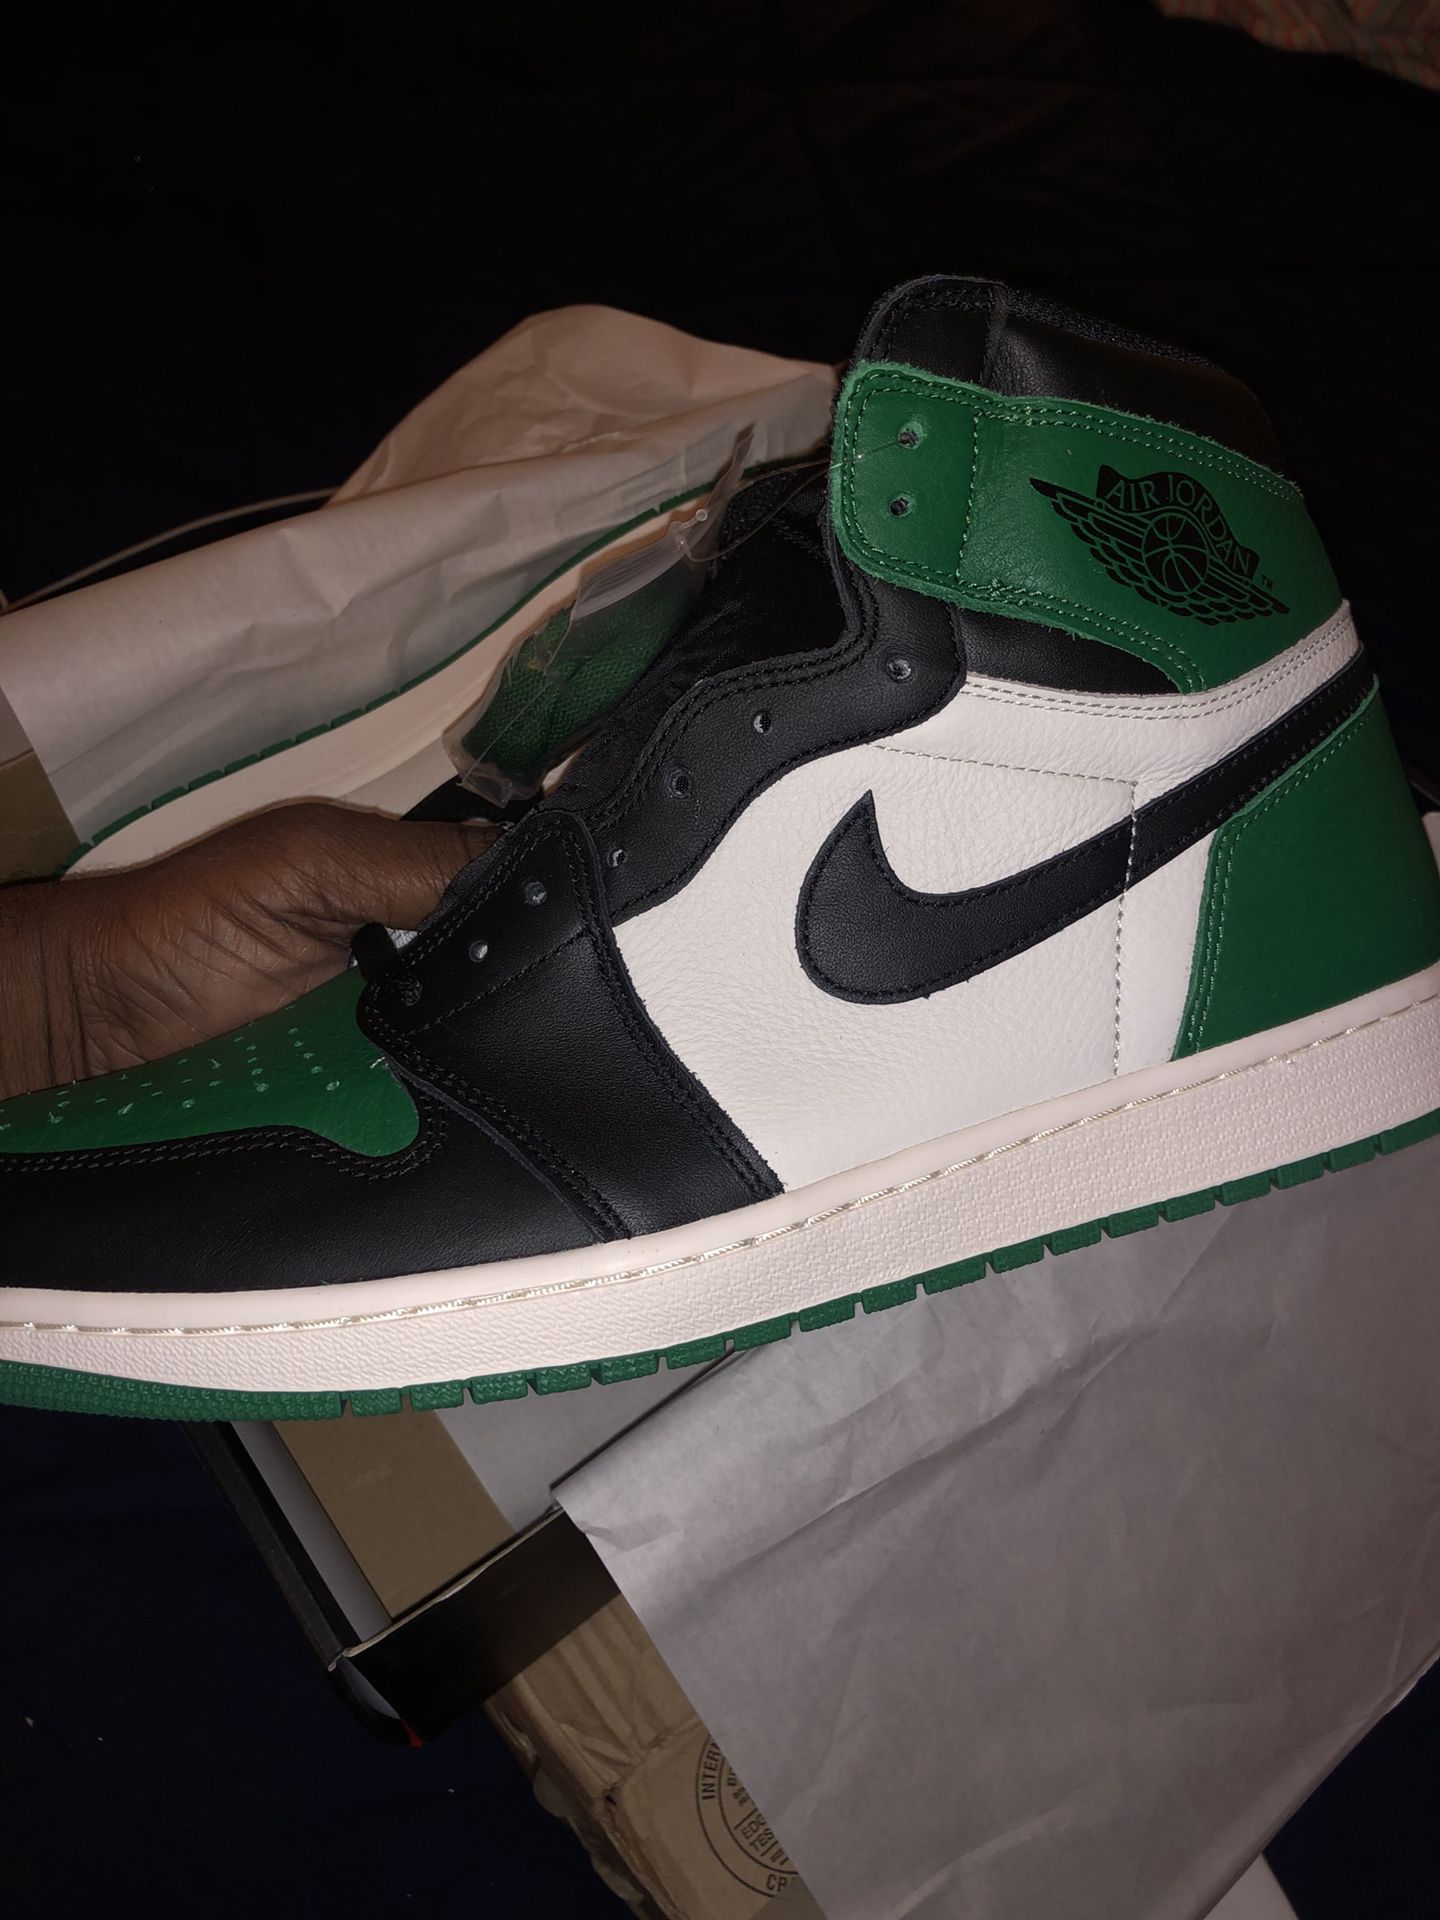 Air Jordan retro 1 pine green size 12 new